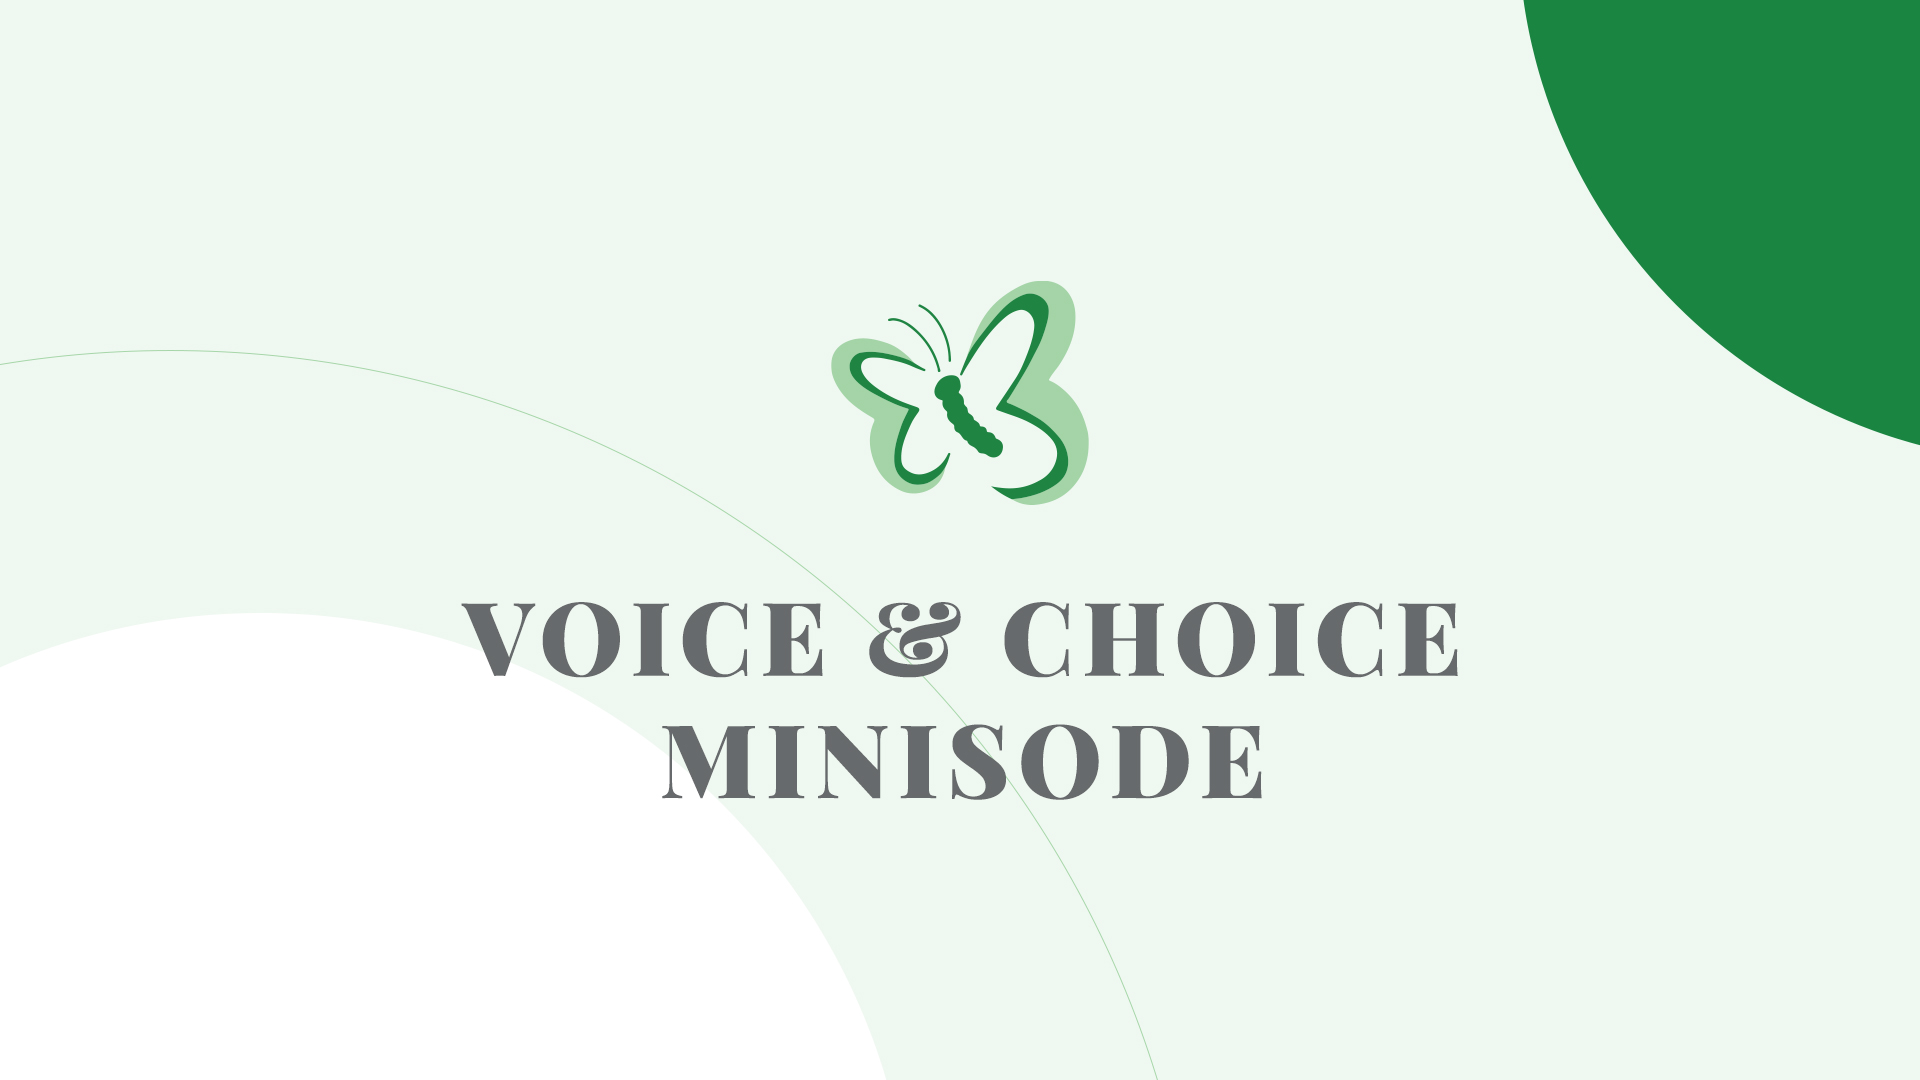 Voice & Choice Minisode